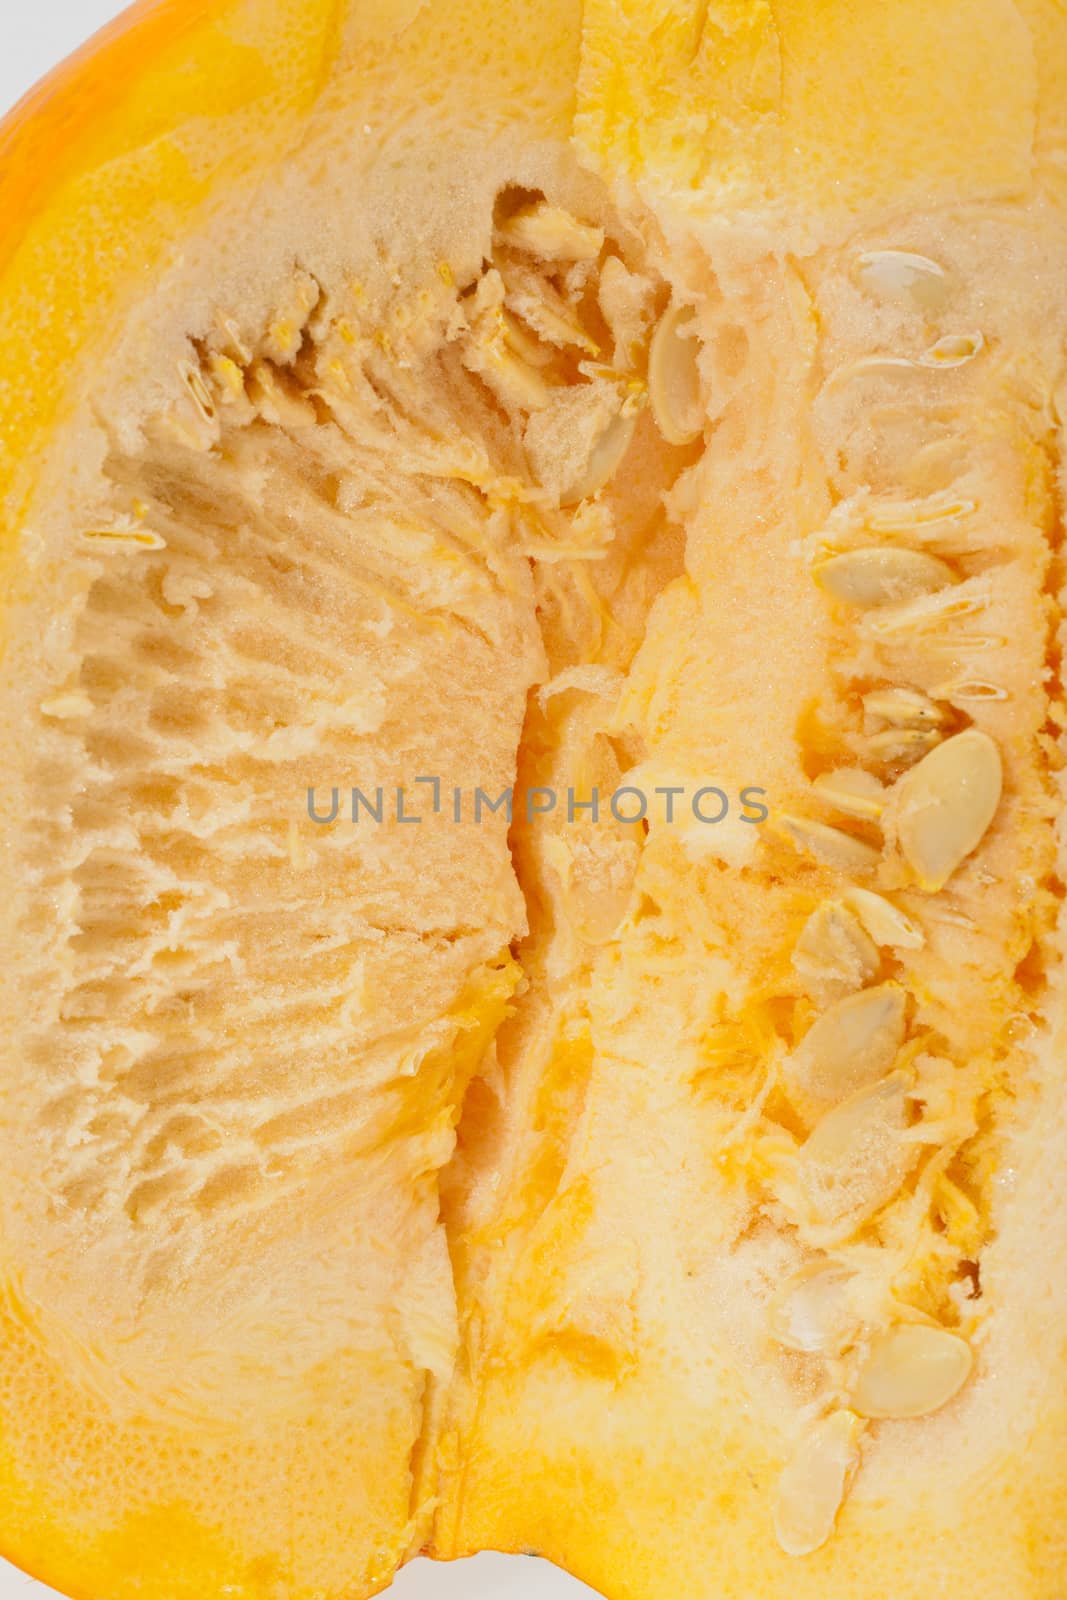 Fresh orange pumpkin isolated on white background  by wjarek